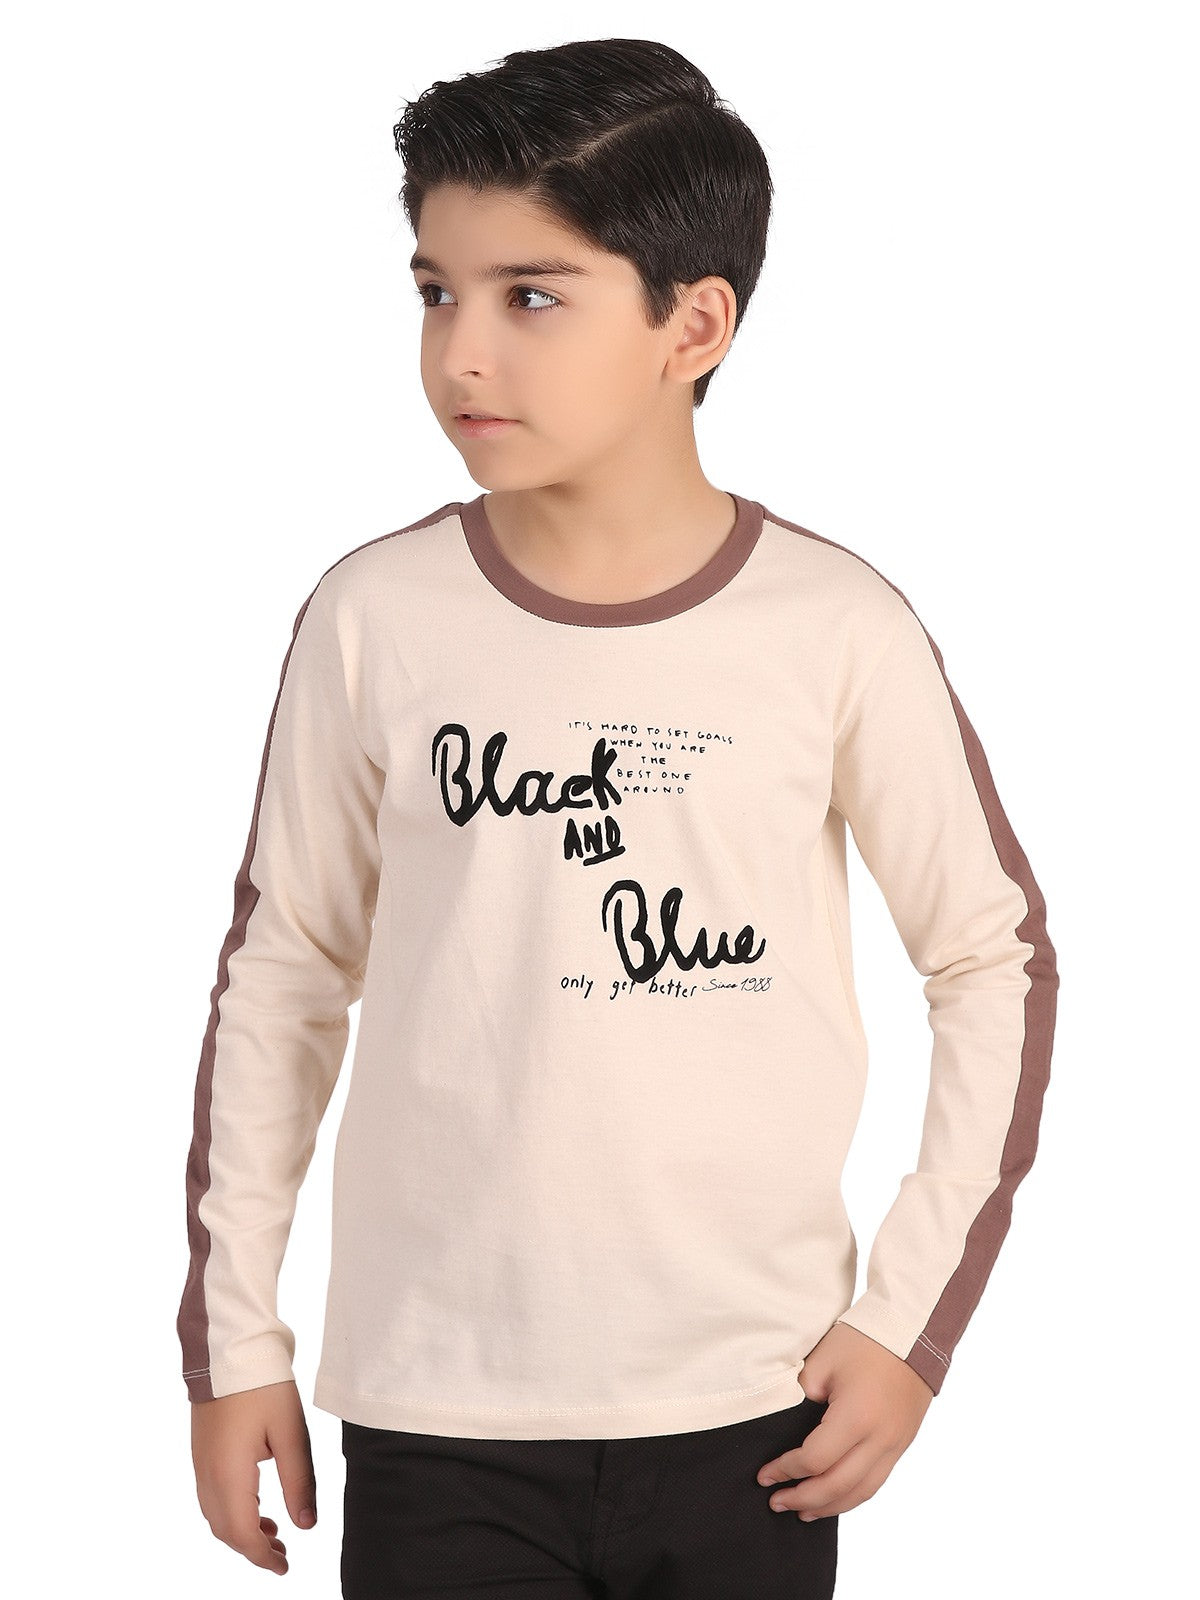 Boy's Cream T-Shirt - EBTTF19-012